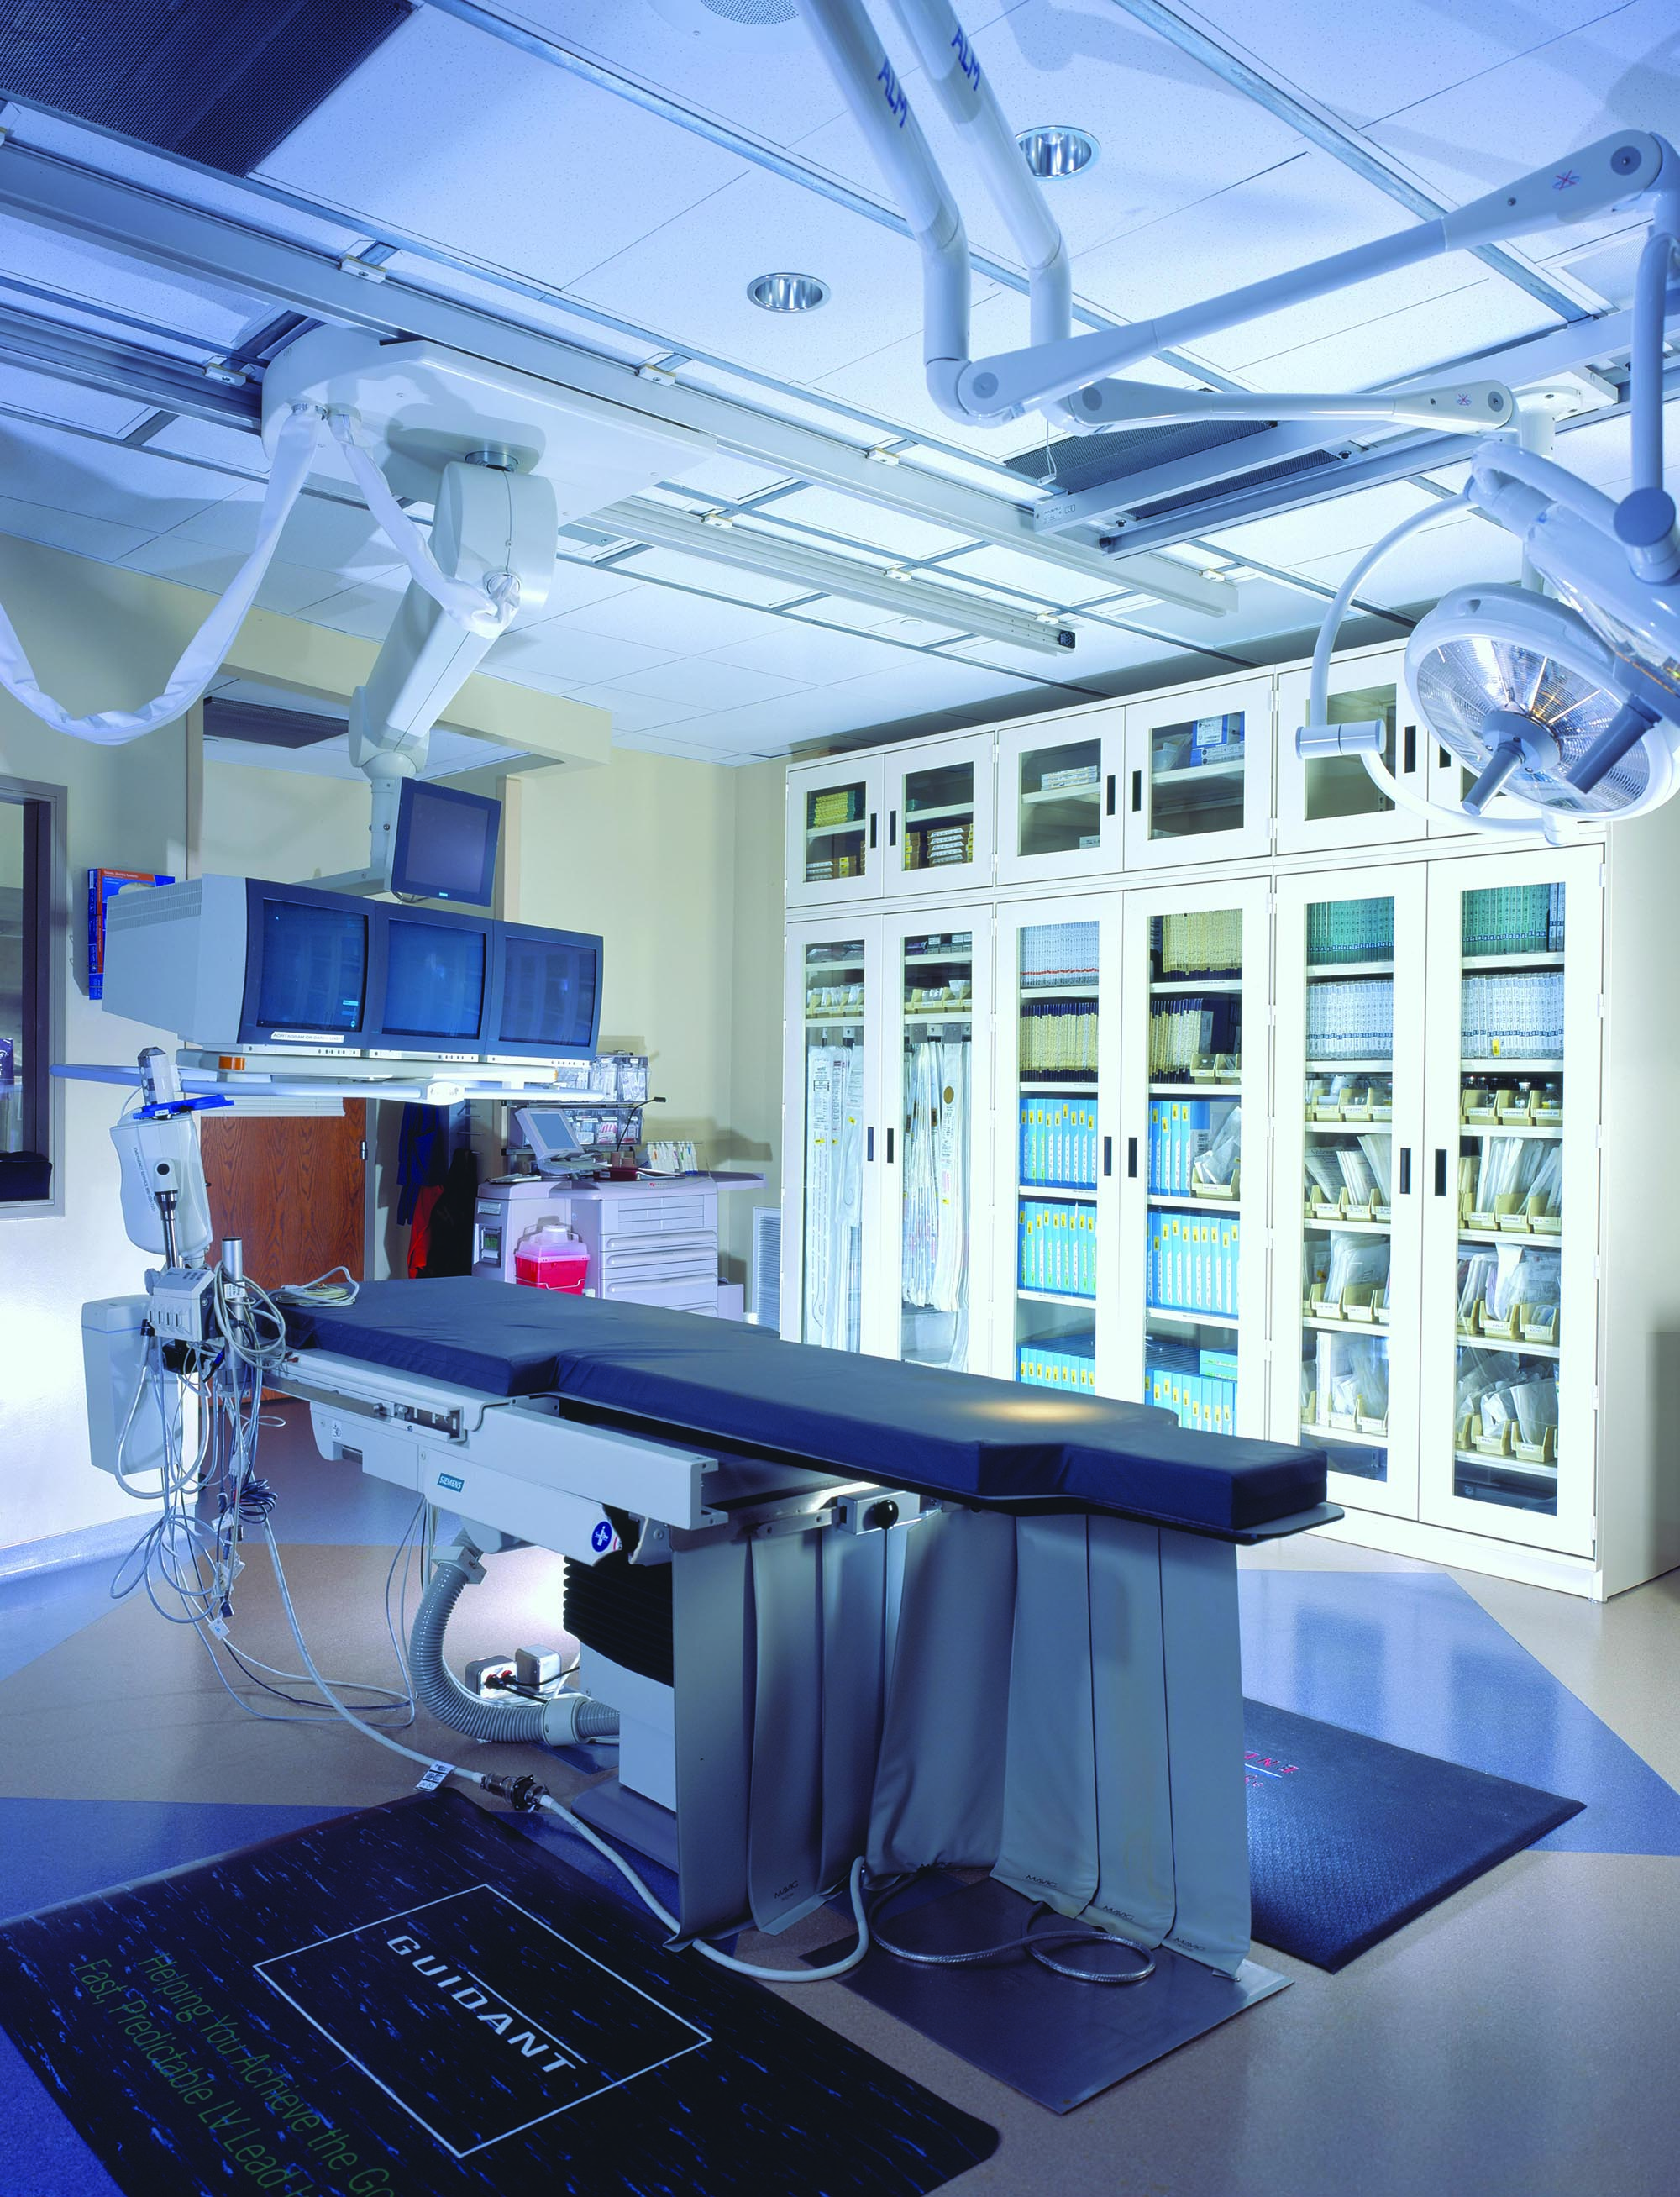 https://donnegan.com/wp-content/uploads/2015/06/healthcare-sterile-storage-cabinets-in-operating-room.jpg